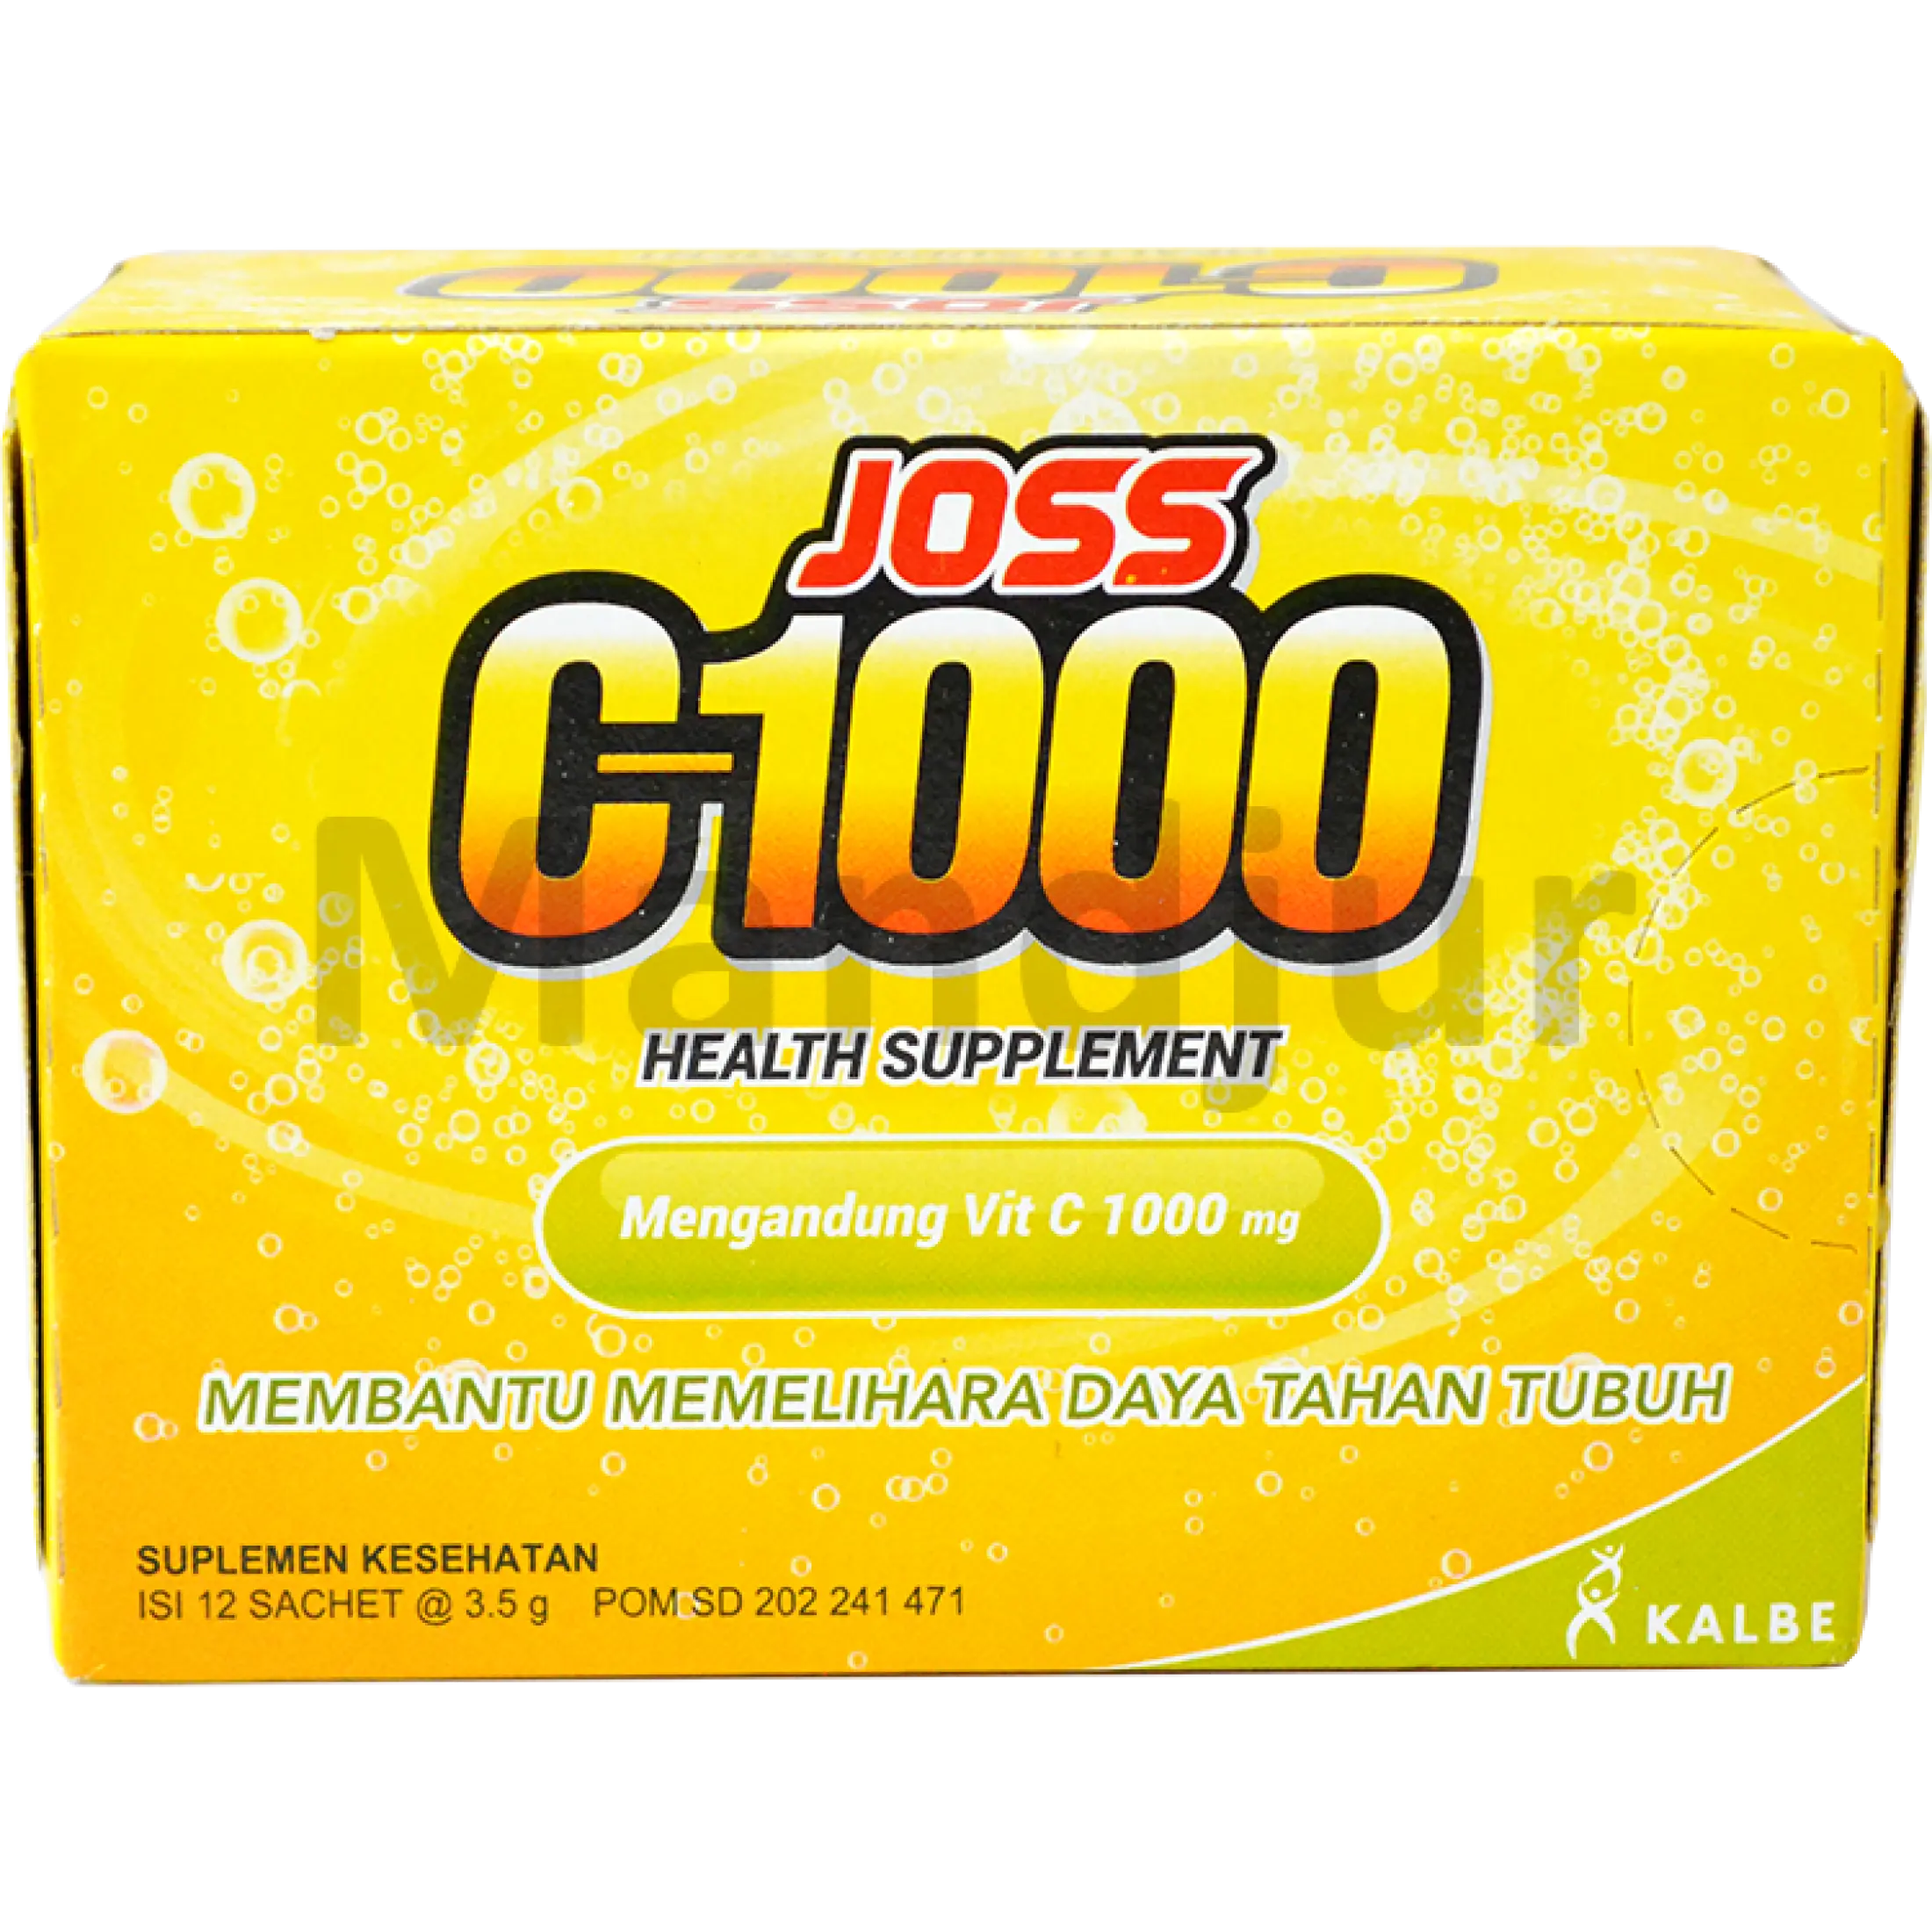 Joss C 1000 Box Isi 12 Sachet Minuman Serbuk Vitamin C 1000 Mg Lazada Indonesia